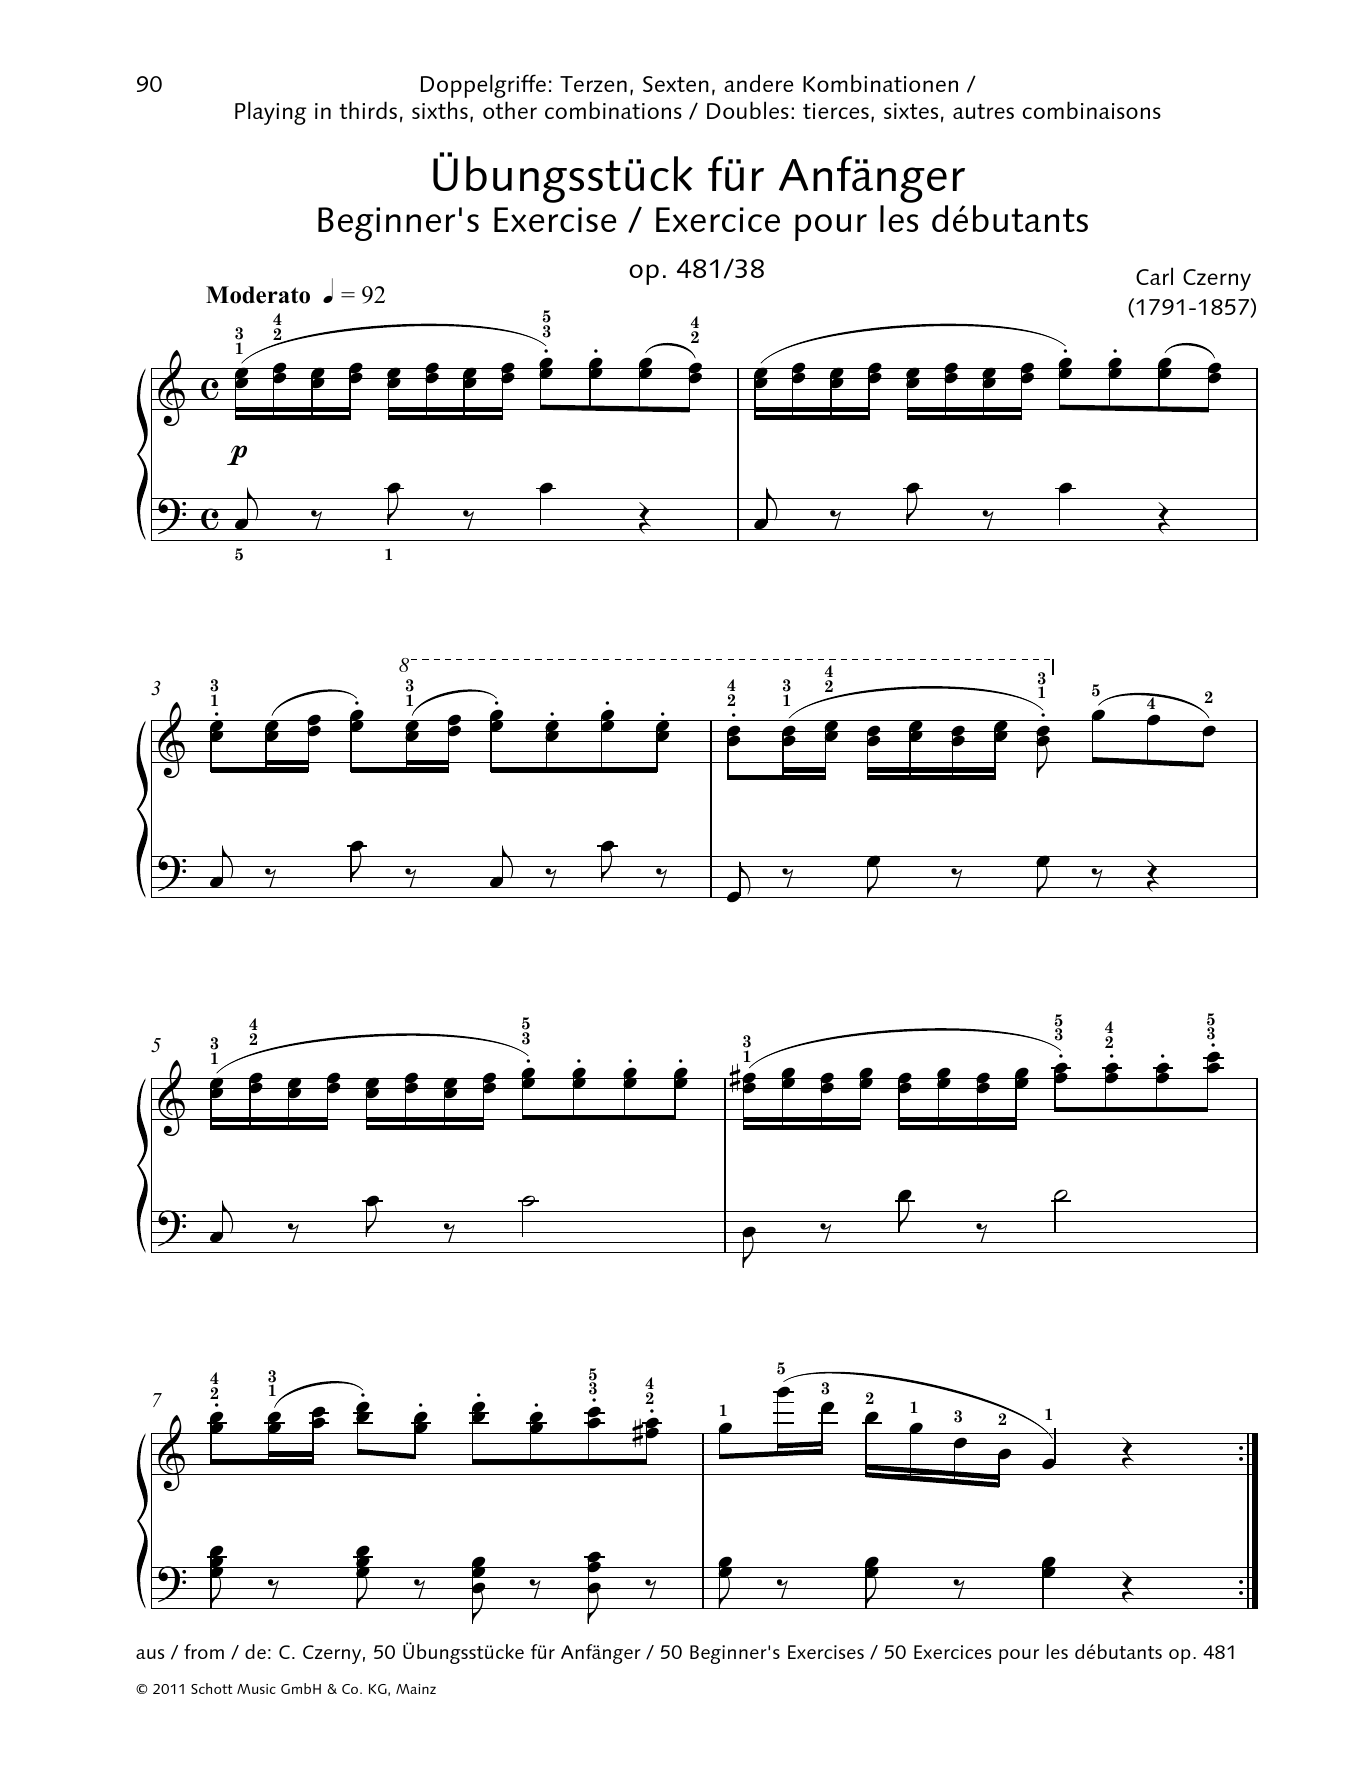 Download Carl Czerny Beginner's Exercise Sheet Music